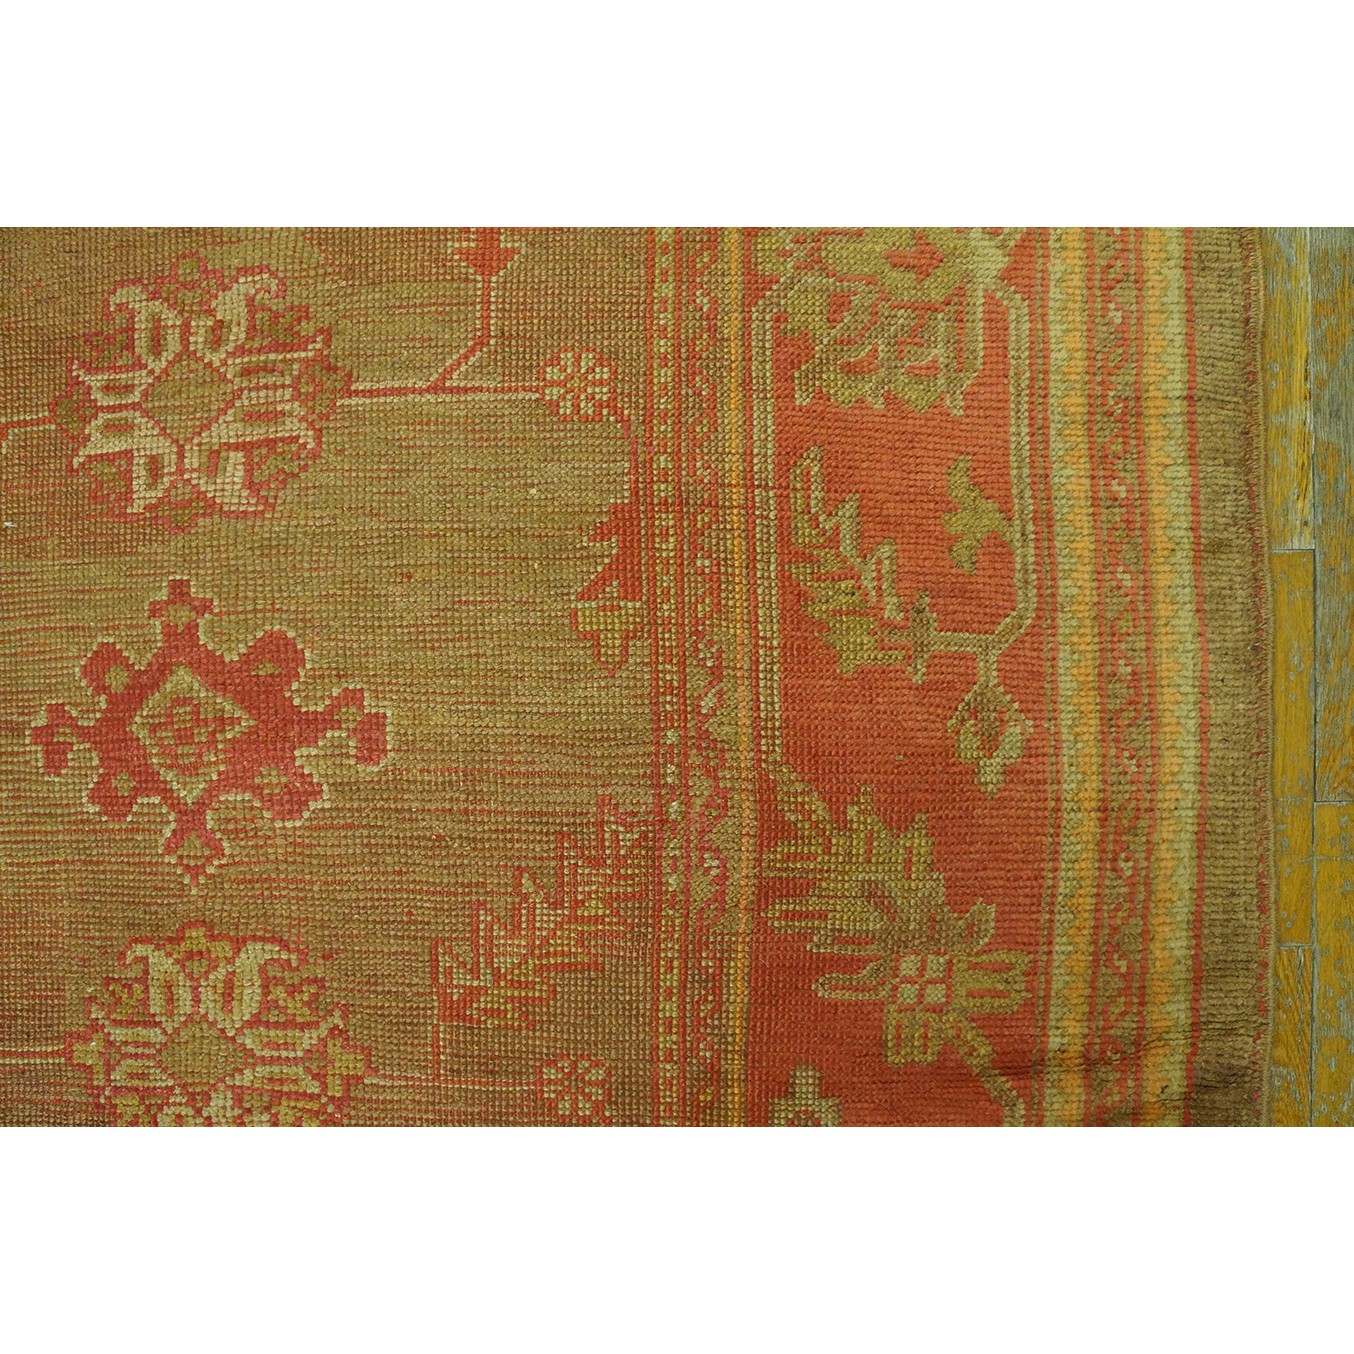 Early 20th Century Turkish Oushak Carpet - Antique Rug Studio